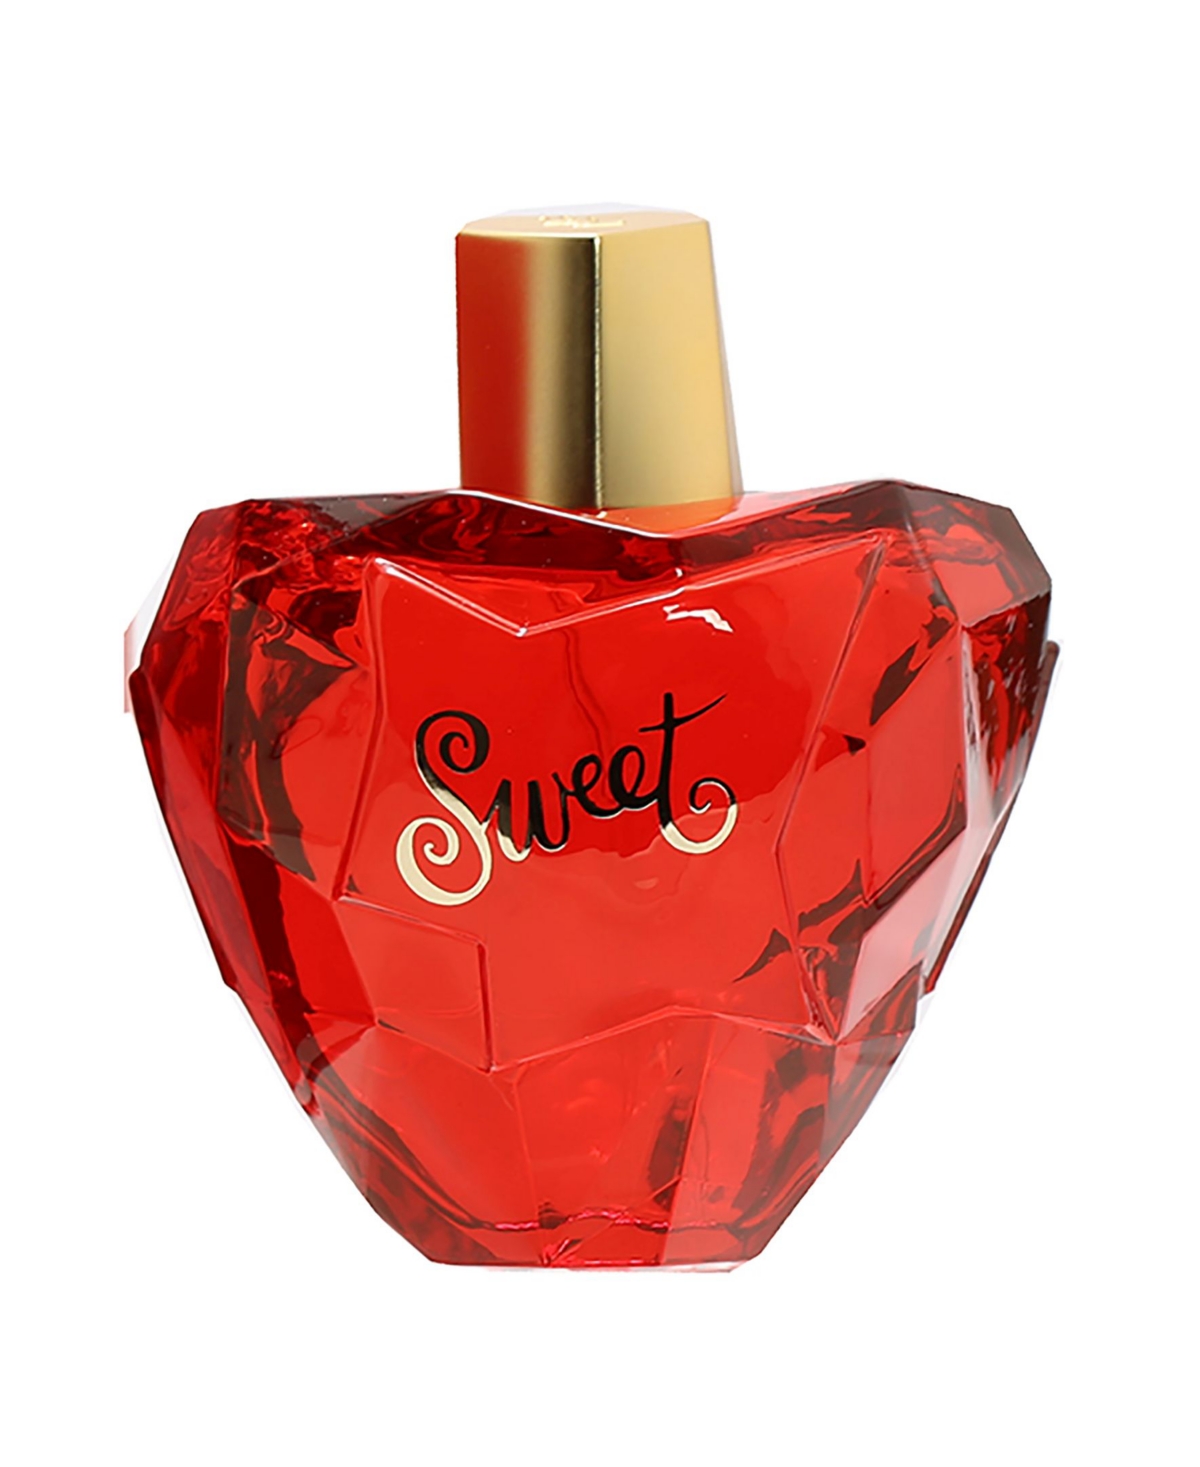 Sweet Eau De Parfum Spray, 3.4 fl oz